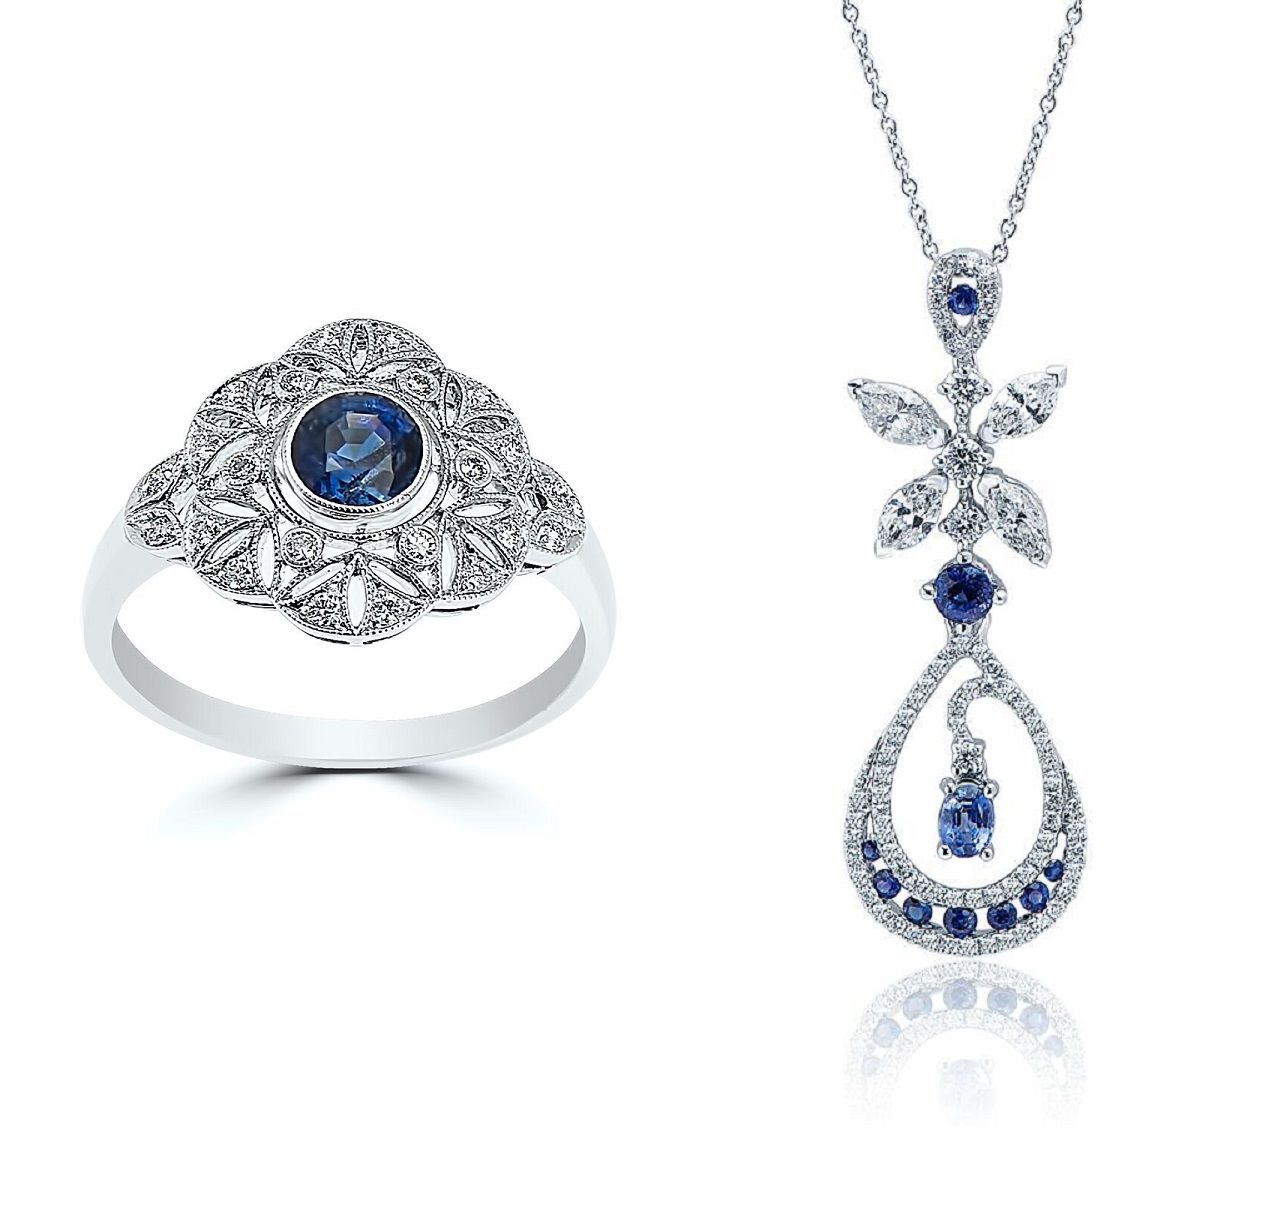 Blue Kashmir Sapphire & Diamond Ring & Pendant Set (3.16ct TW)